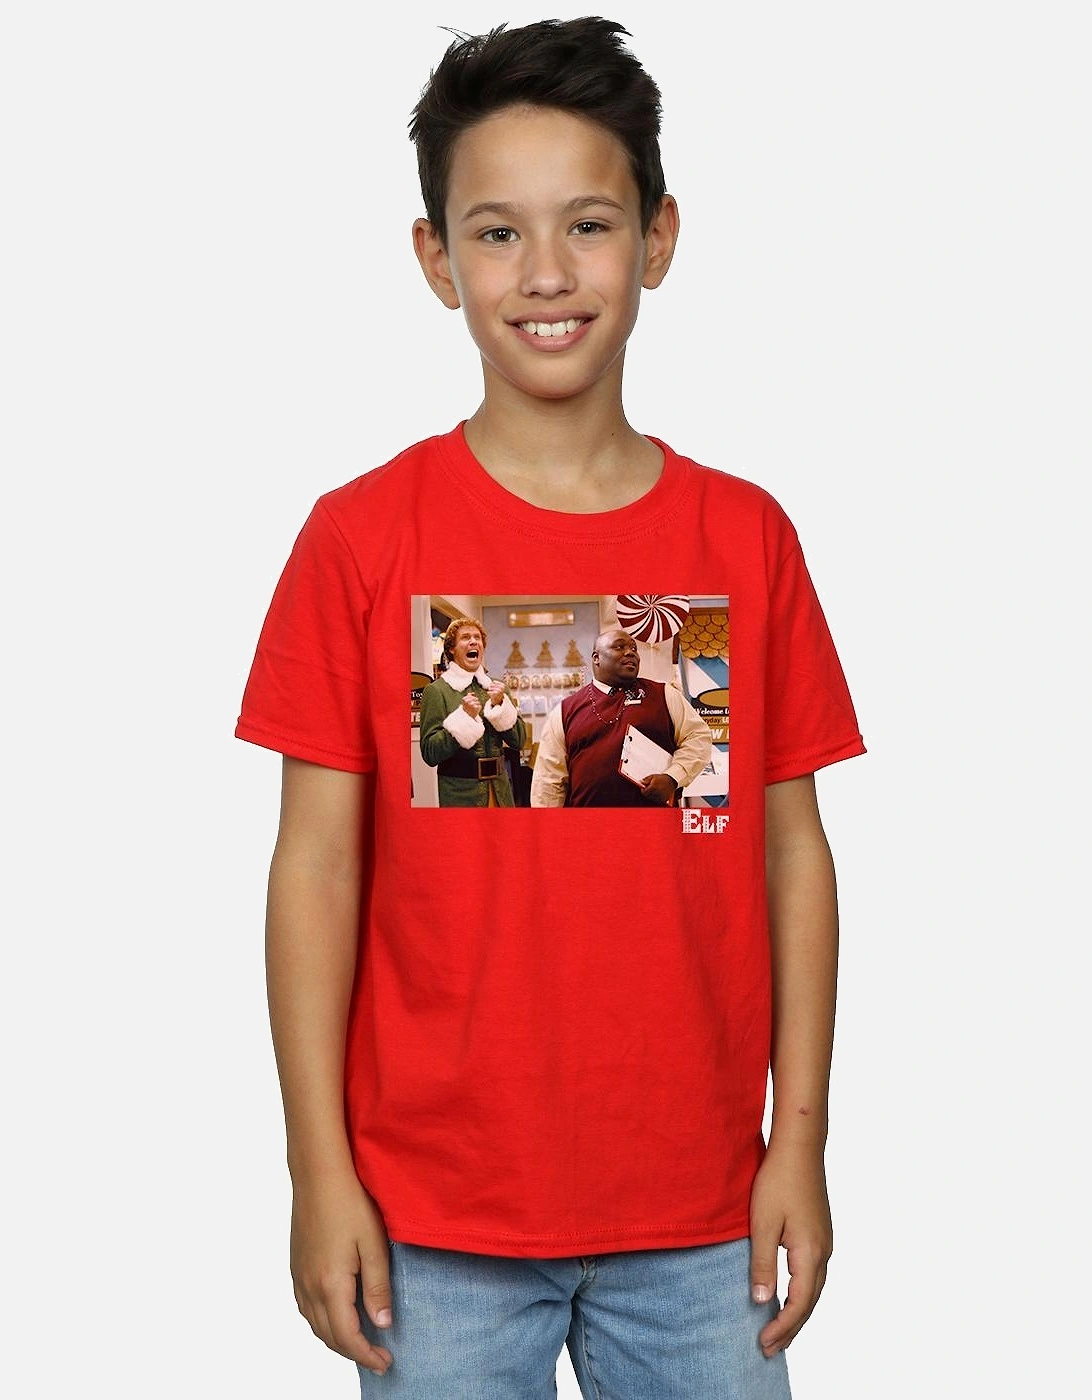 Boys Christmas Store Cheer T-Shirt